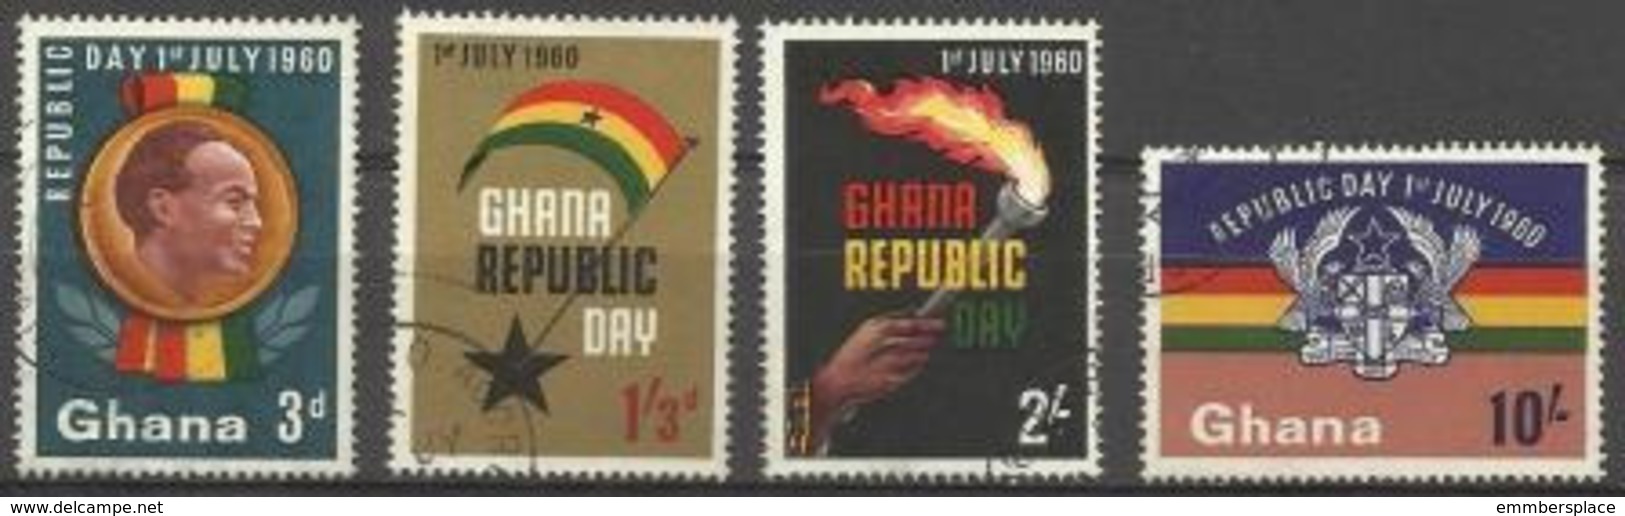 GHANA - 1960 Republic Day Used  SG 245-8  Sc 78-81 - Ghana (1957-...)